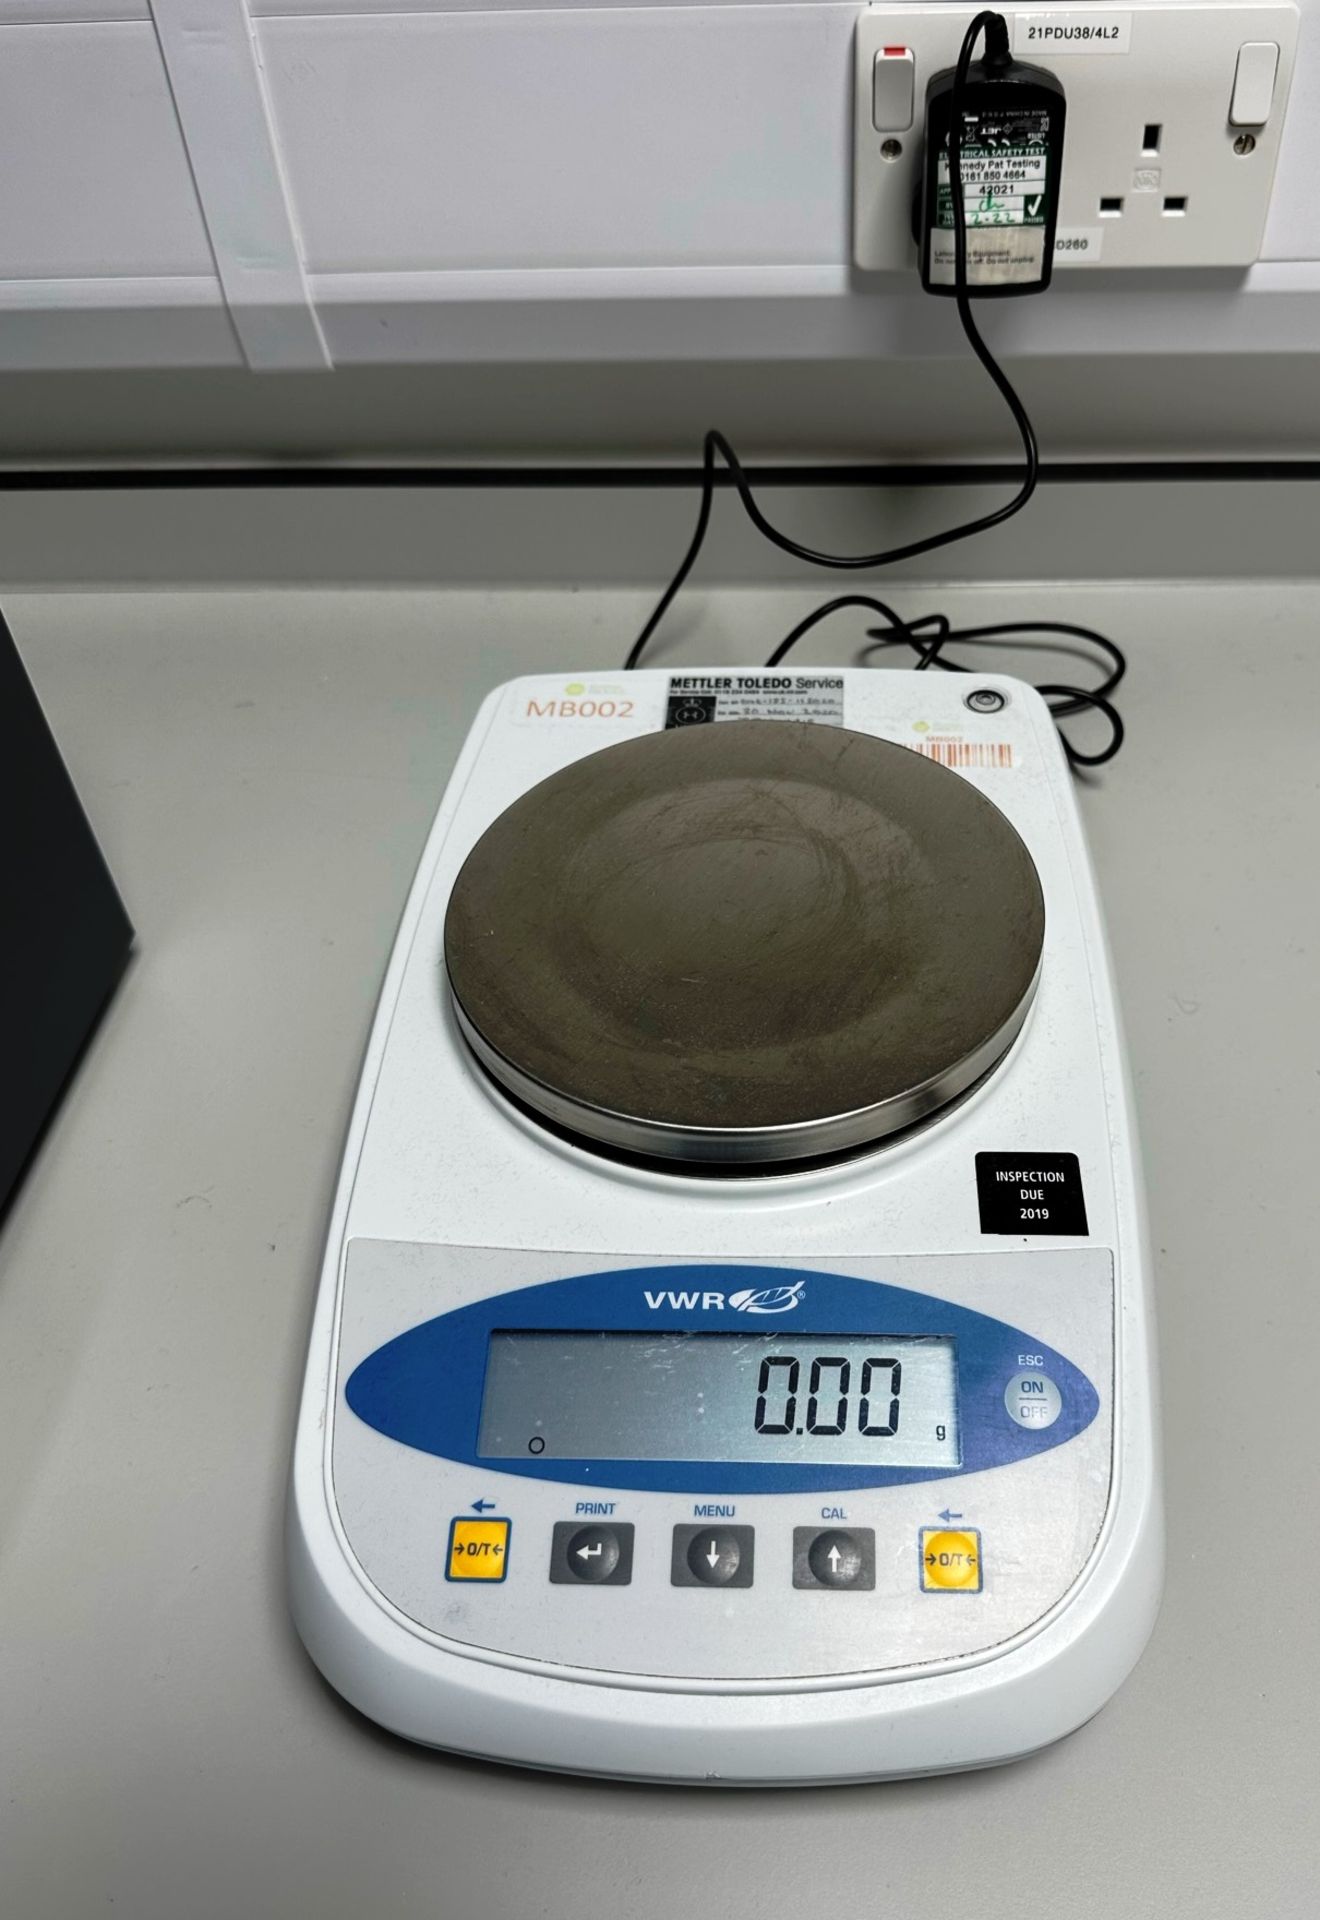 VWR LP-1002i Precision Balance Scale